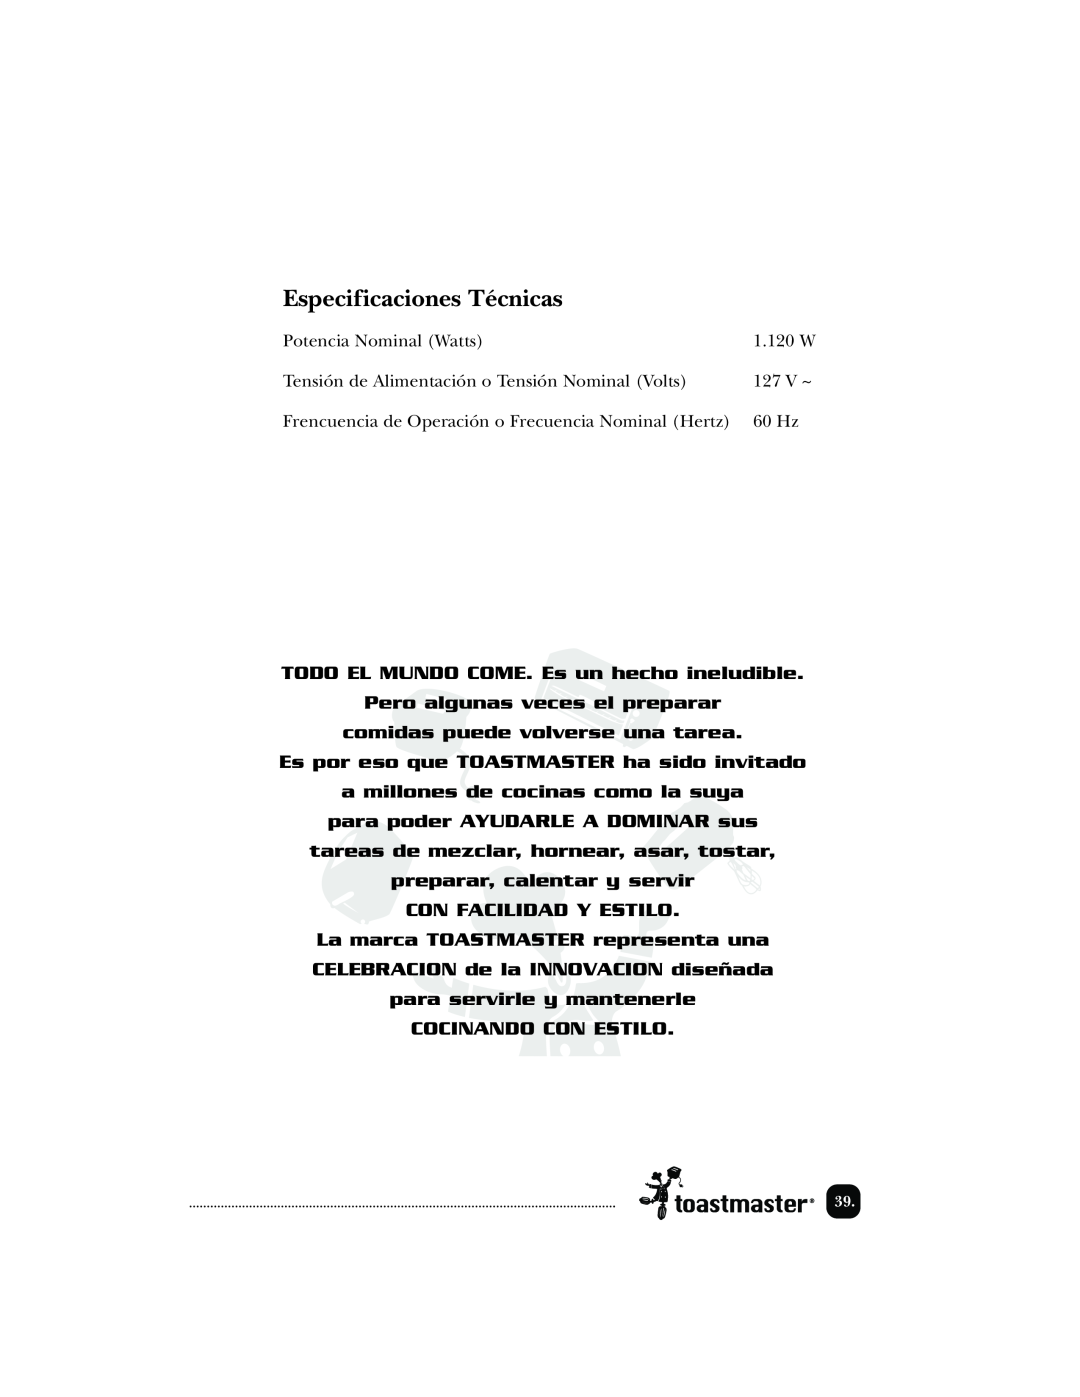 Toastmaster TSM2, 289MEX, 288K, 378589, 288MEX manual Especificaciones Técnicas 